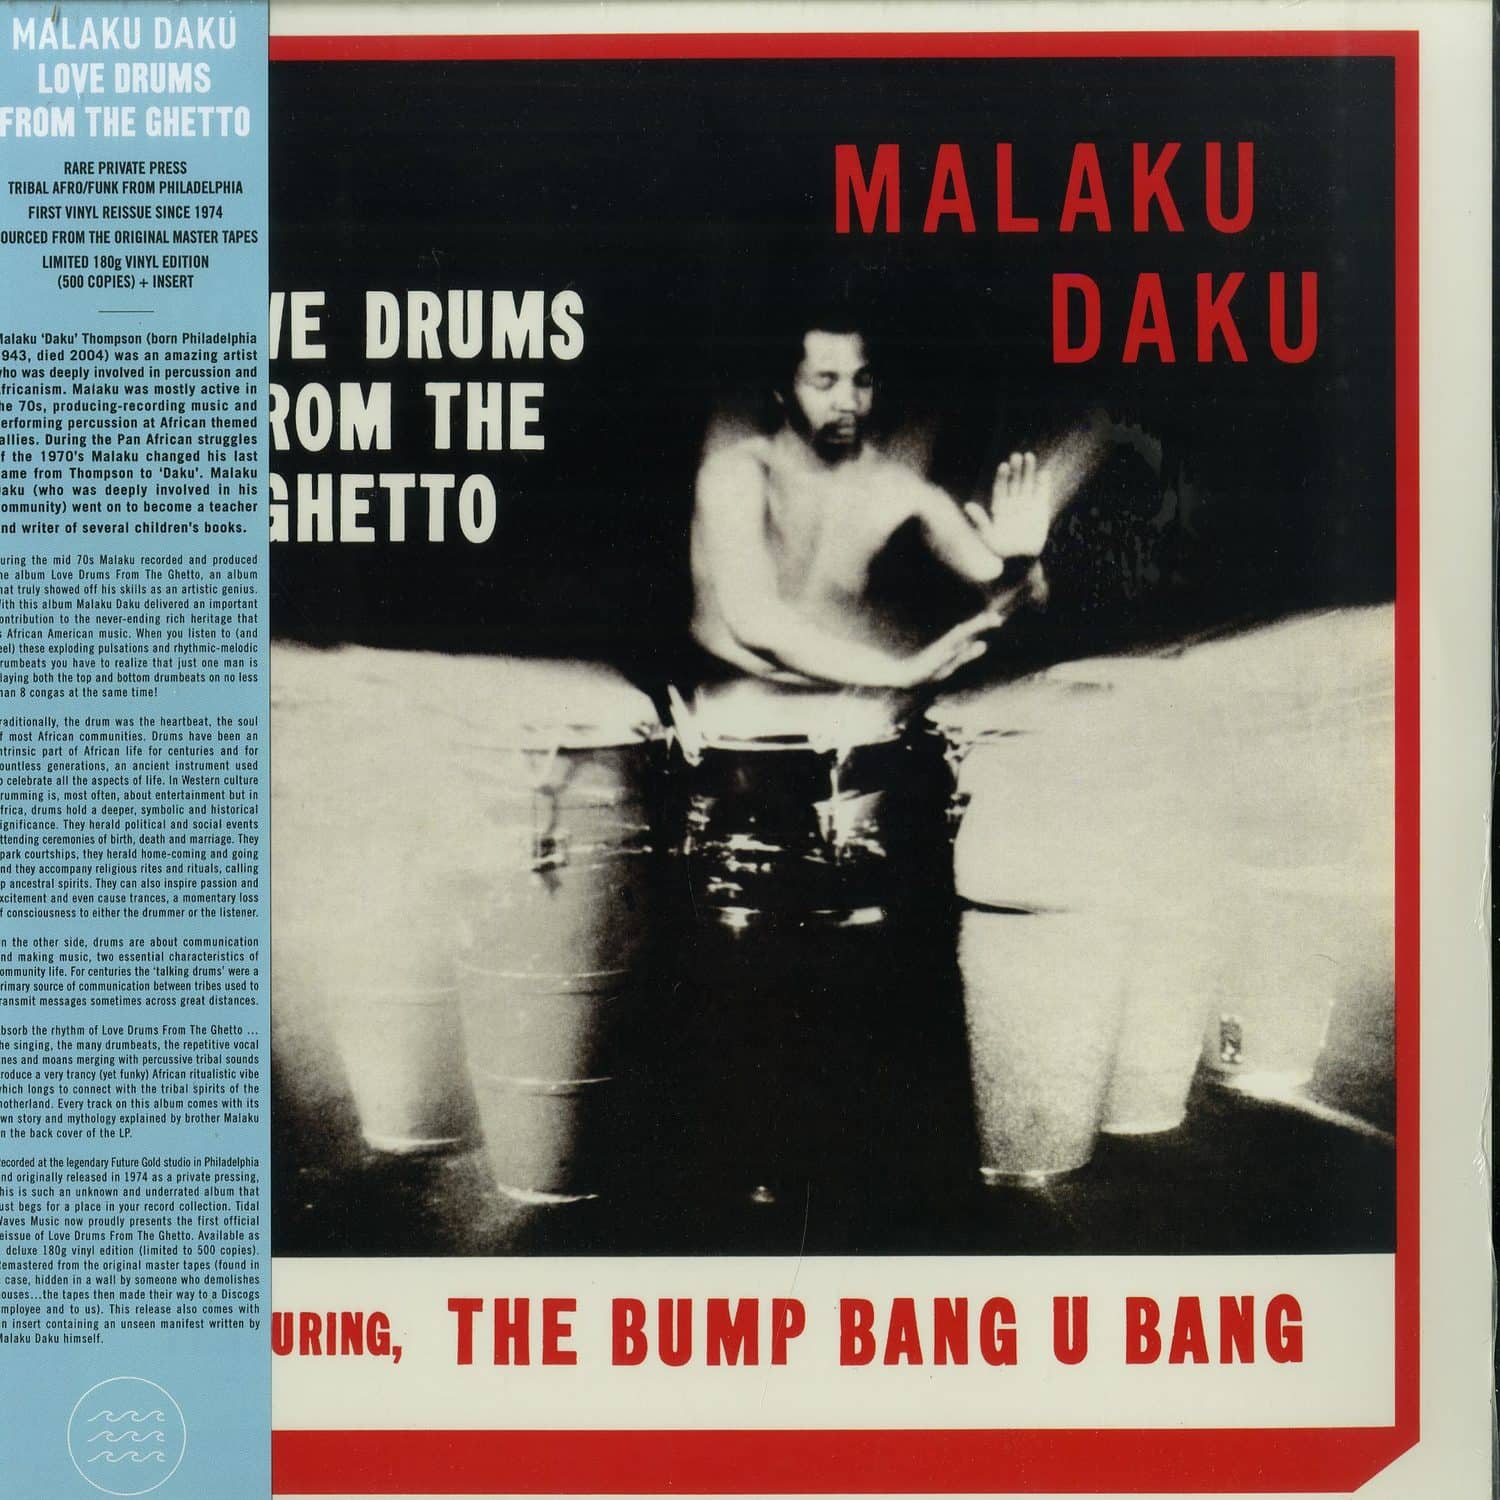 Malaku Daku - LOVE DRUMS FROM THE GHETTO 